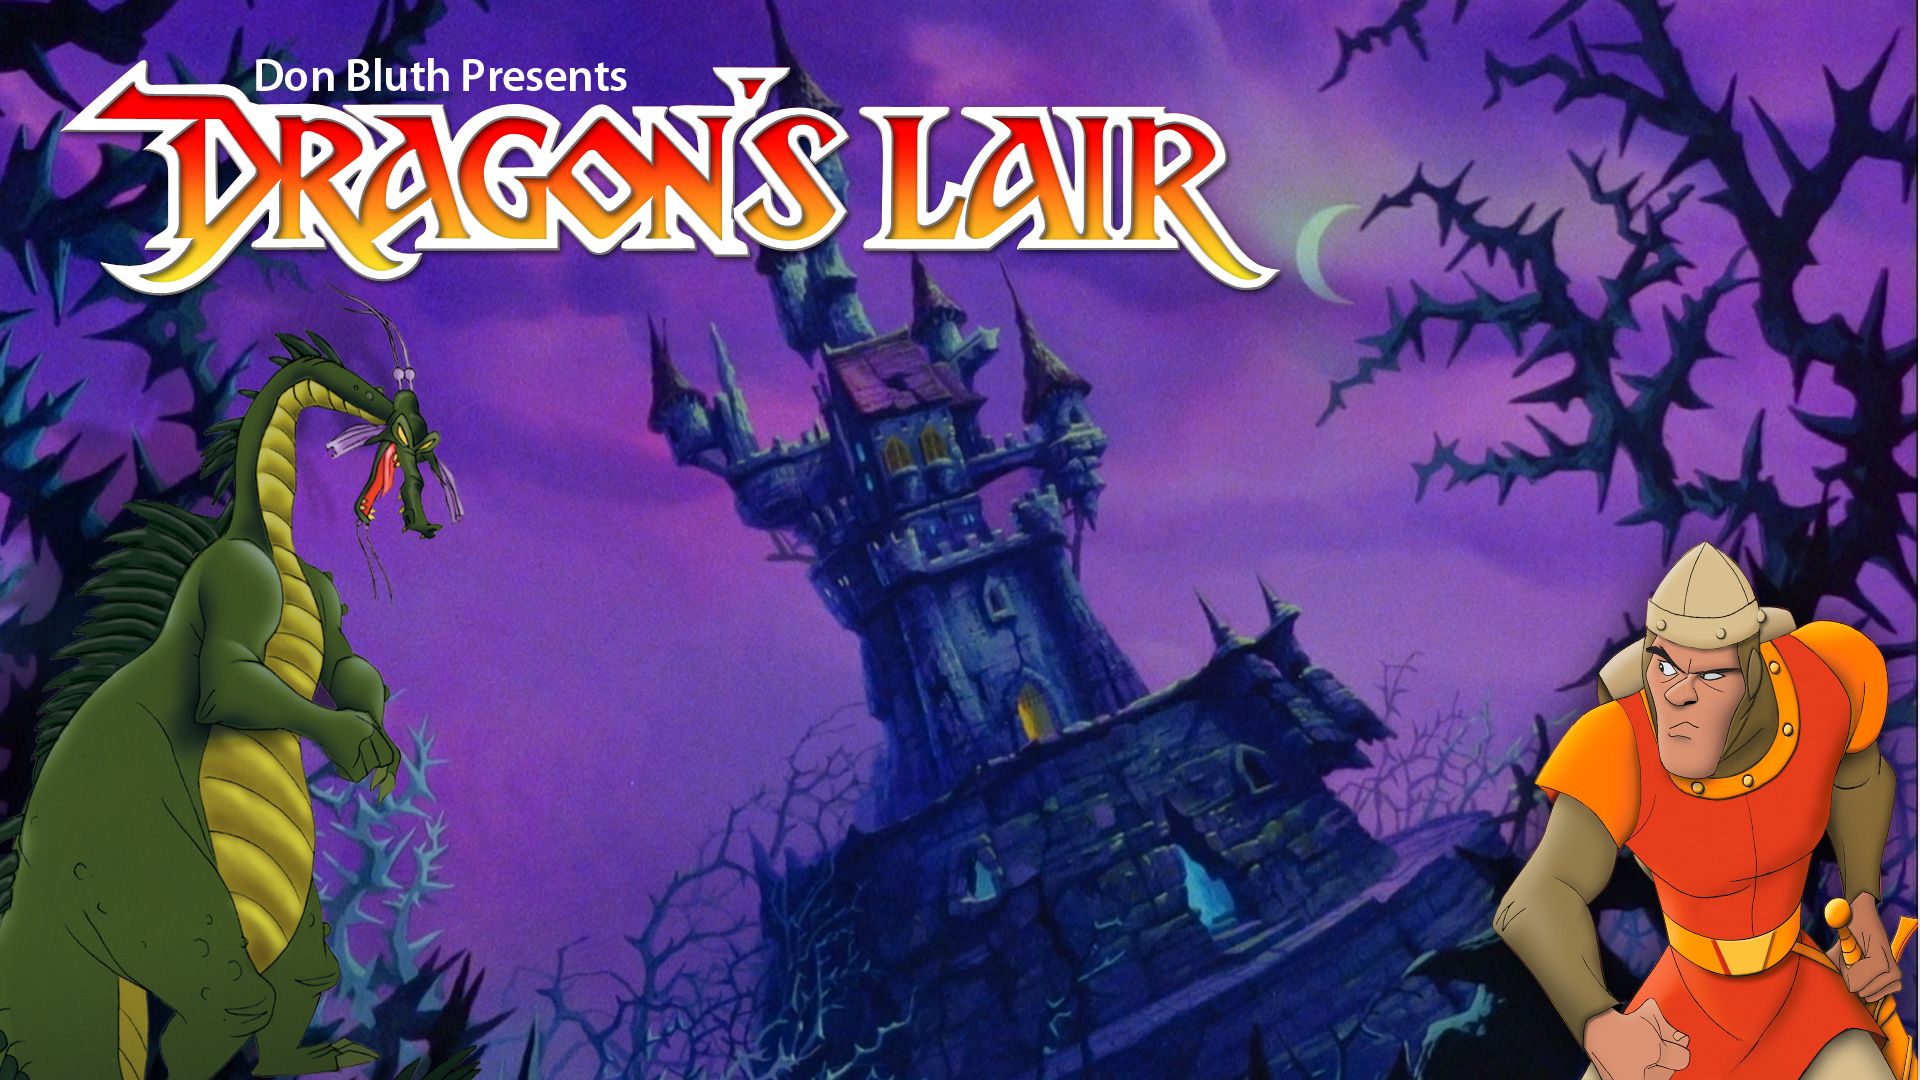 Dragon's Lair (TV Series 1984)